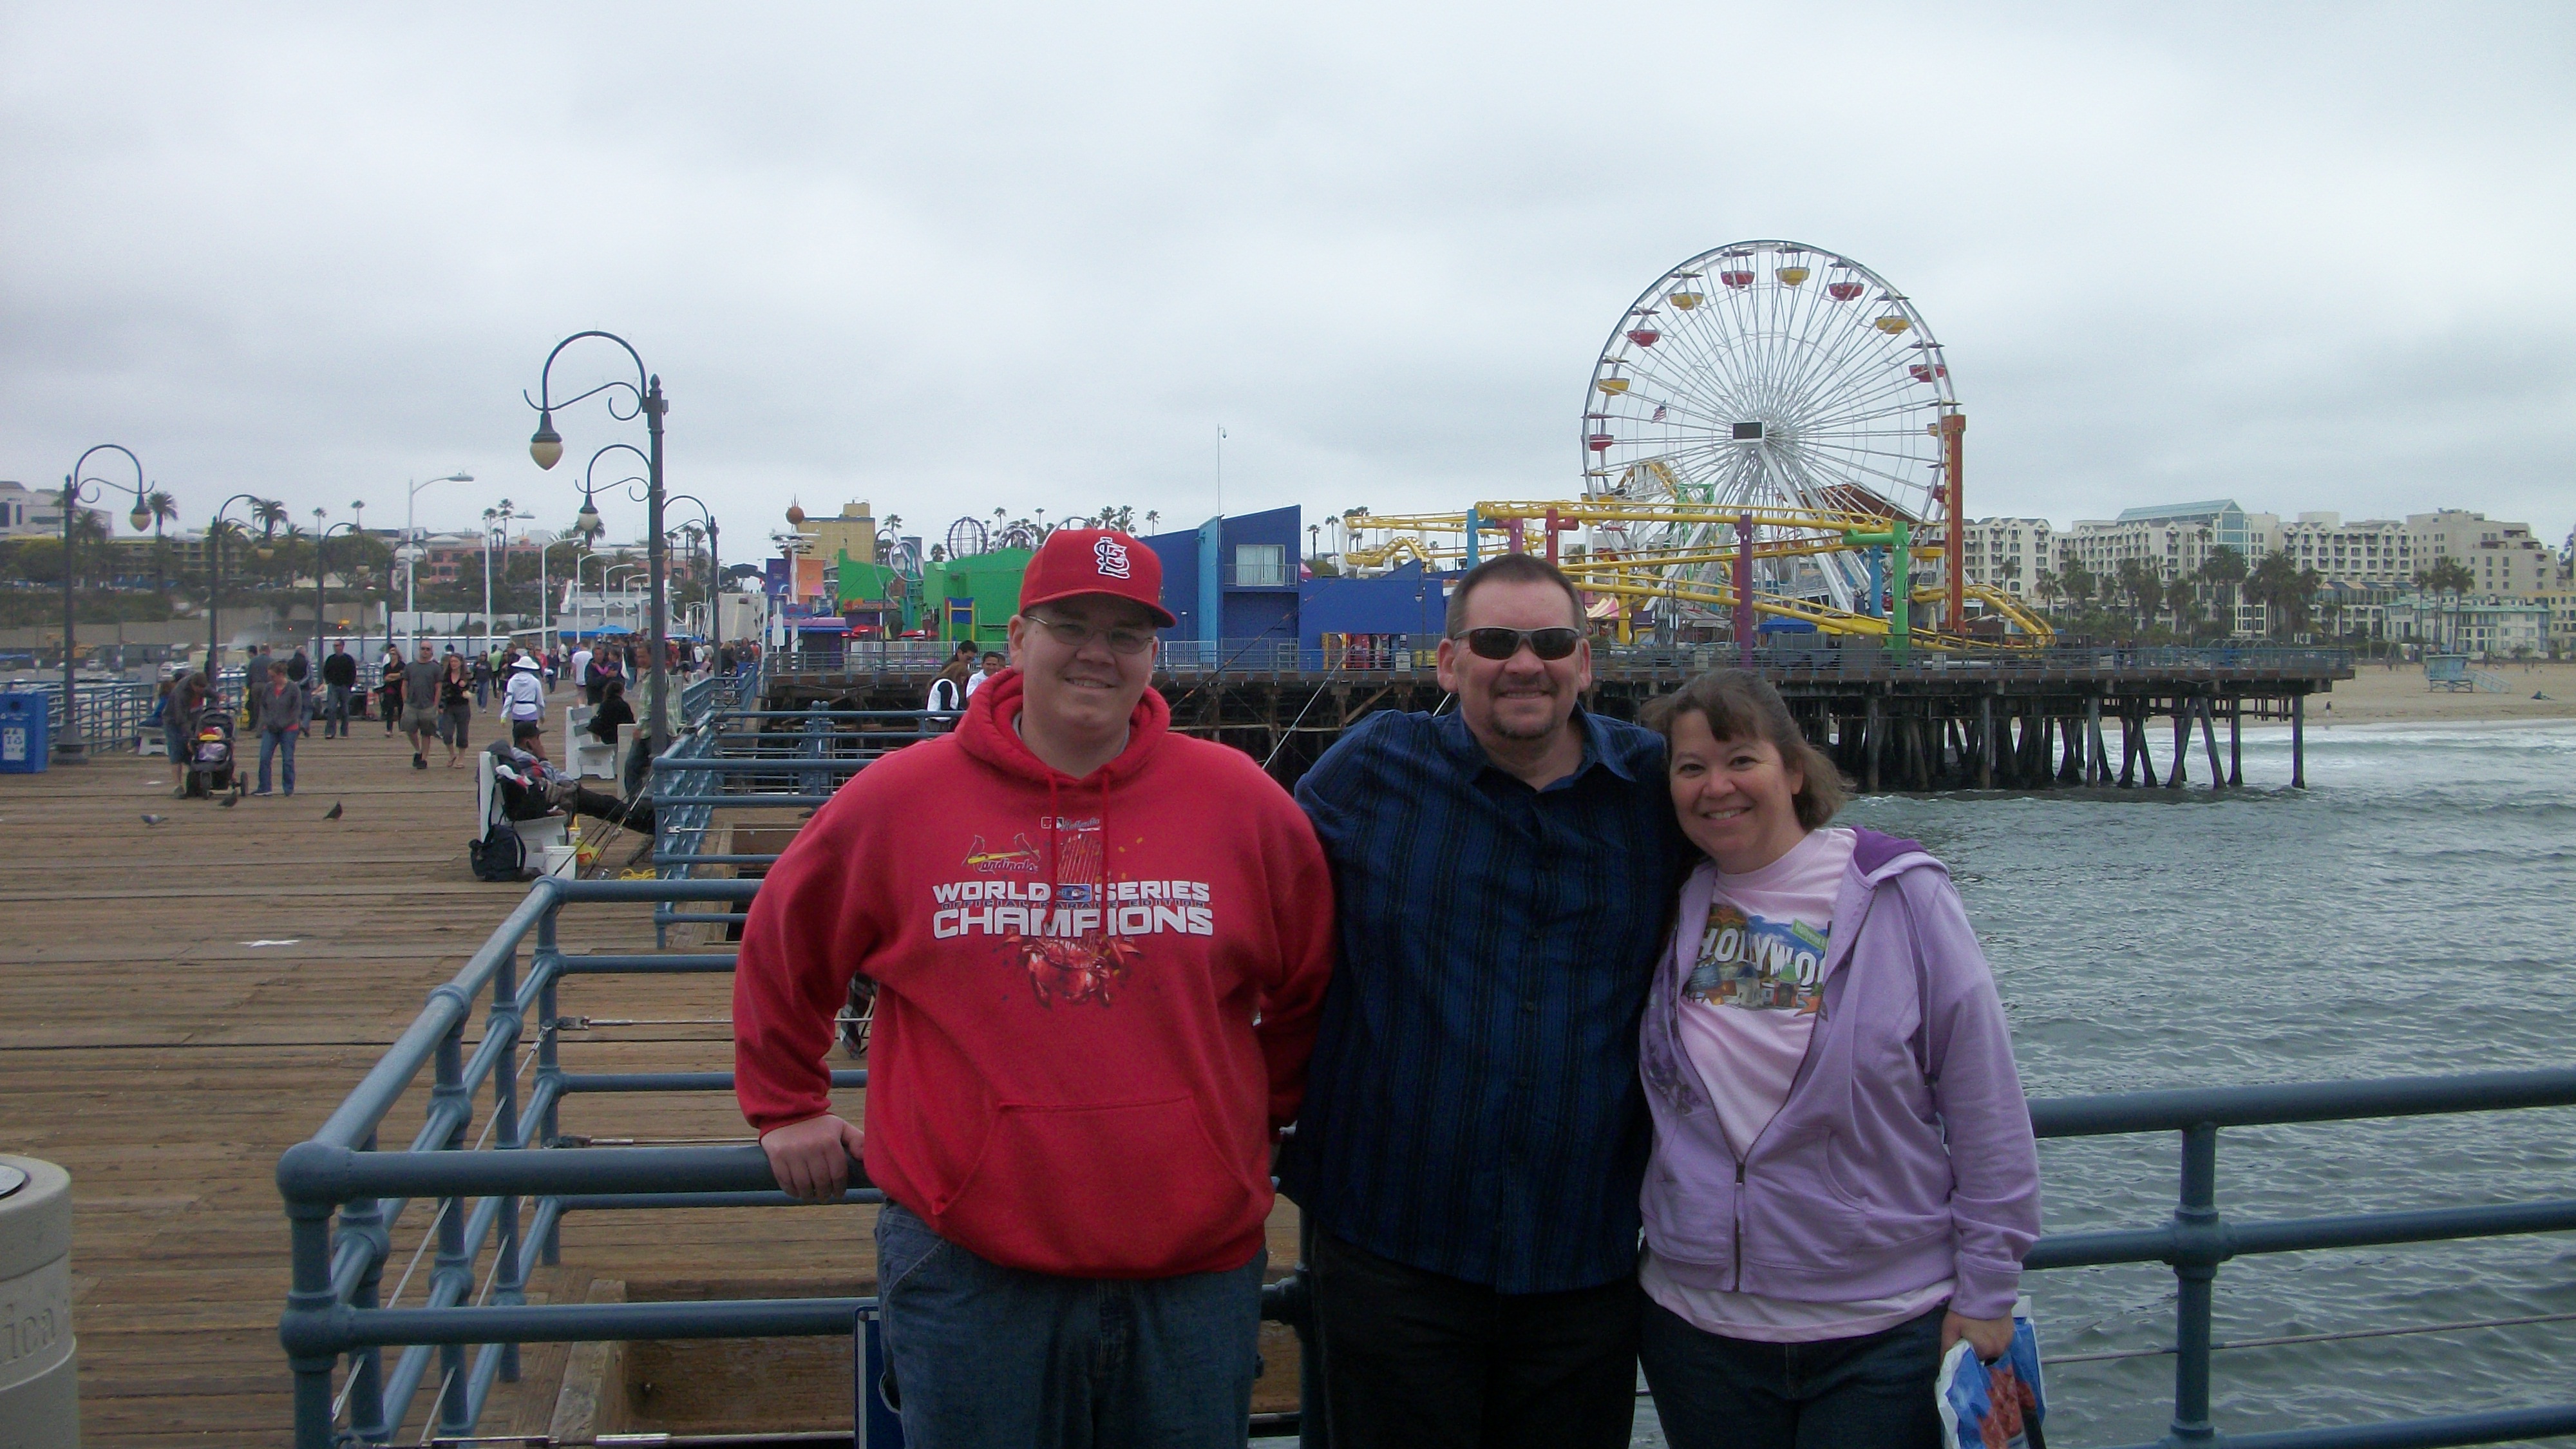 Candy, Mark and Daniel Beard at the Santa Monica Pier - March 2011